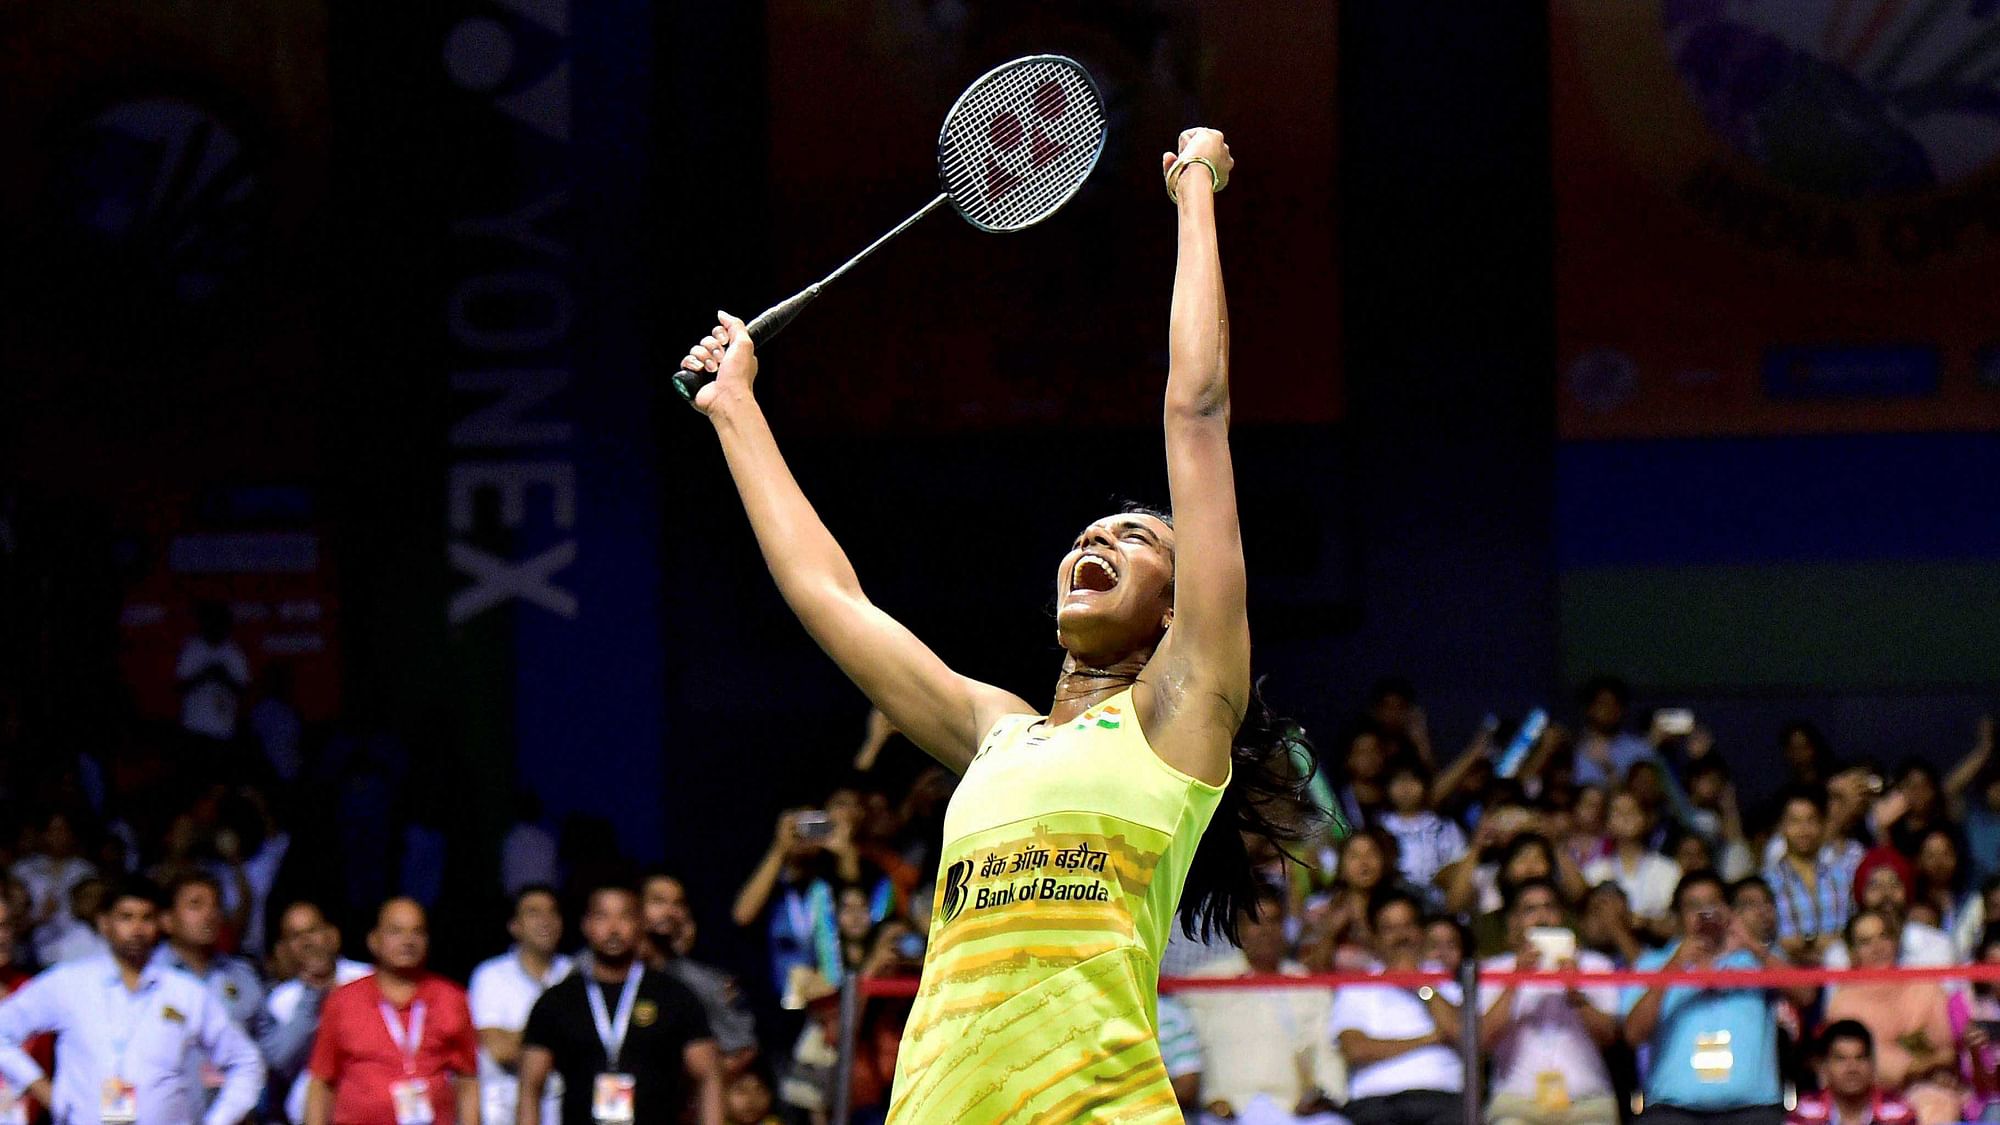 PV Sindhu celebrates after winning the India Open final. (Photo: PTI)